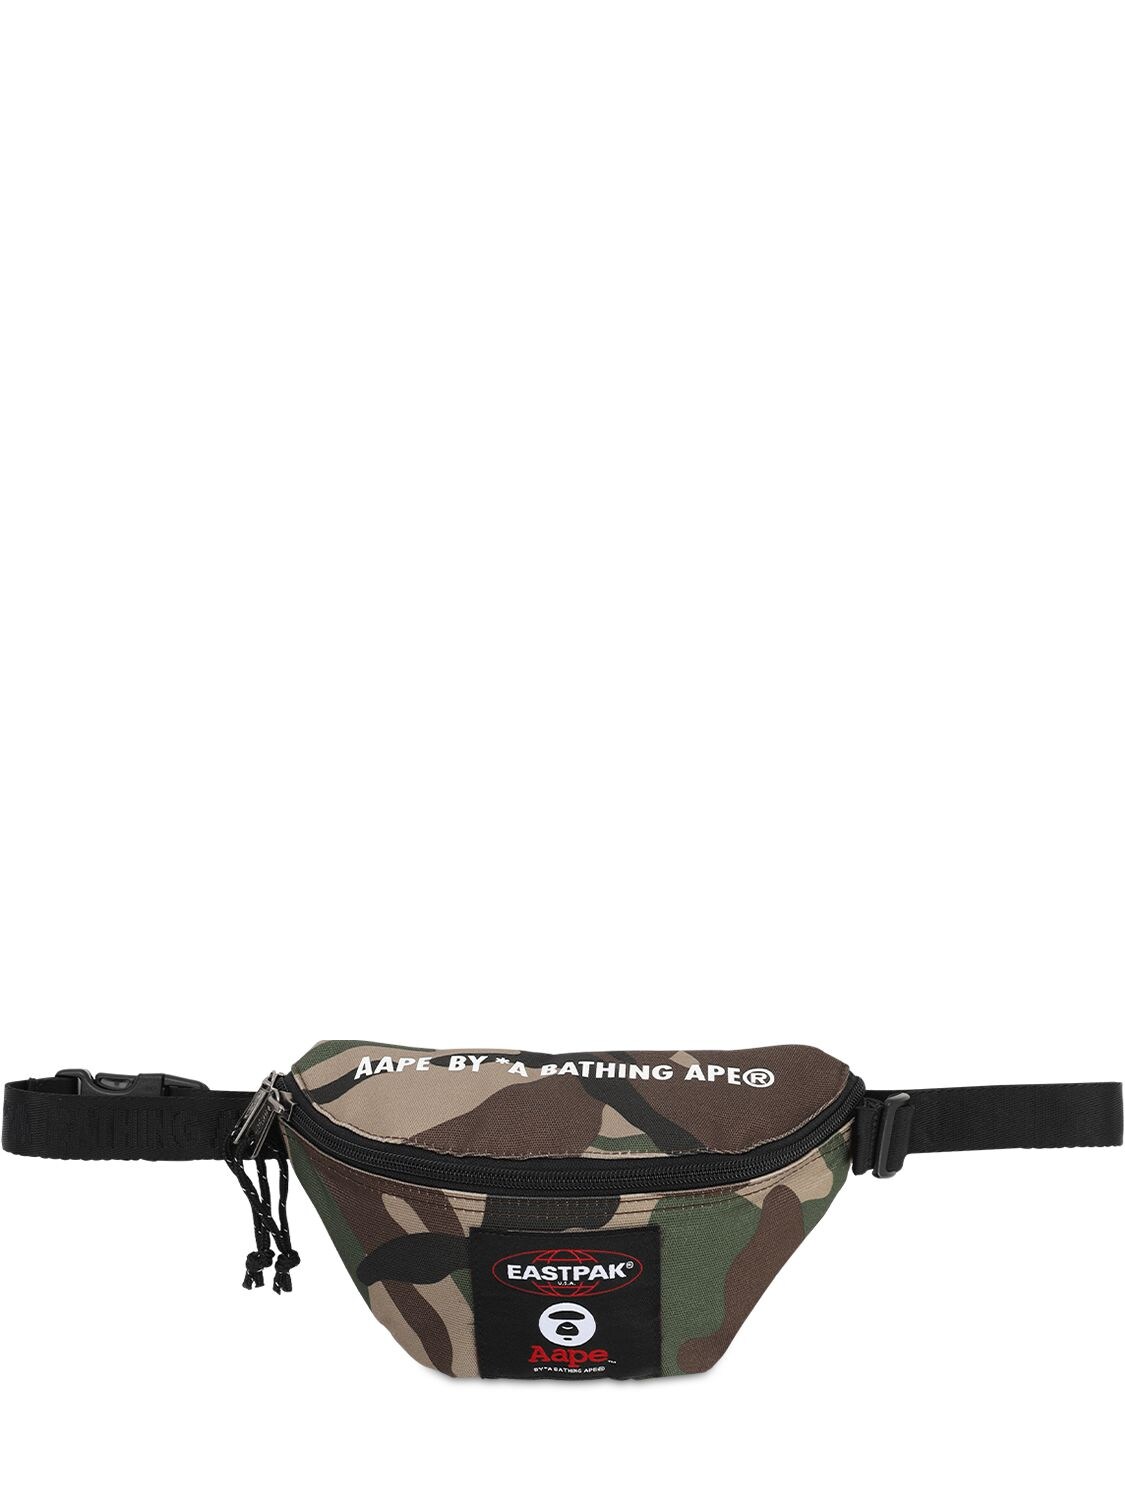 Eastpak Aape Springer Camo Belt Bag In Army Camo